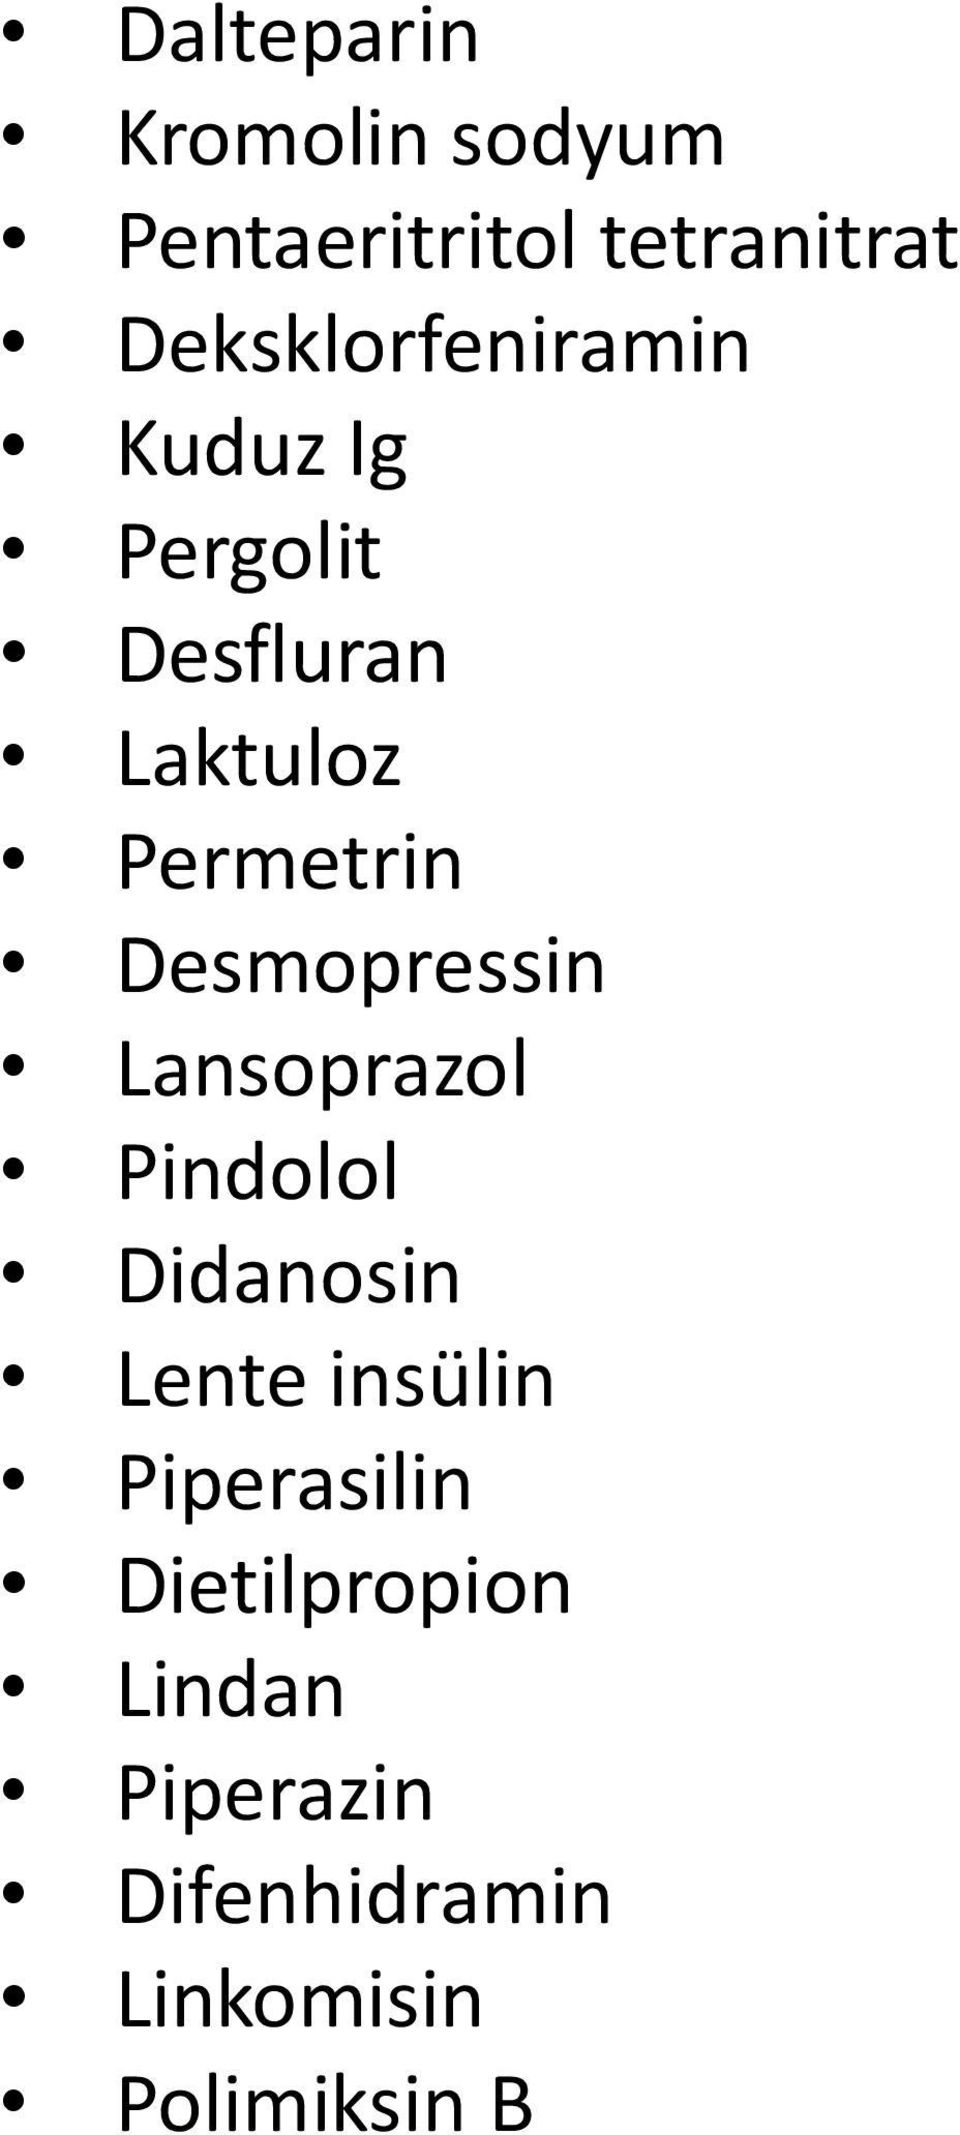 Desmopressin Lansoprazol Pindolol Didanosin Lente insülin